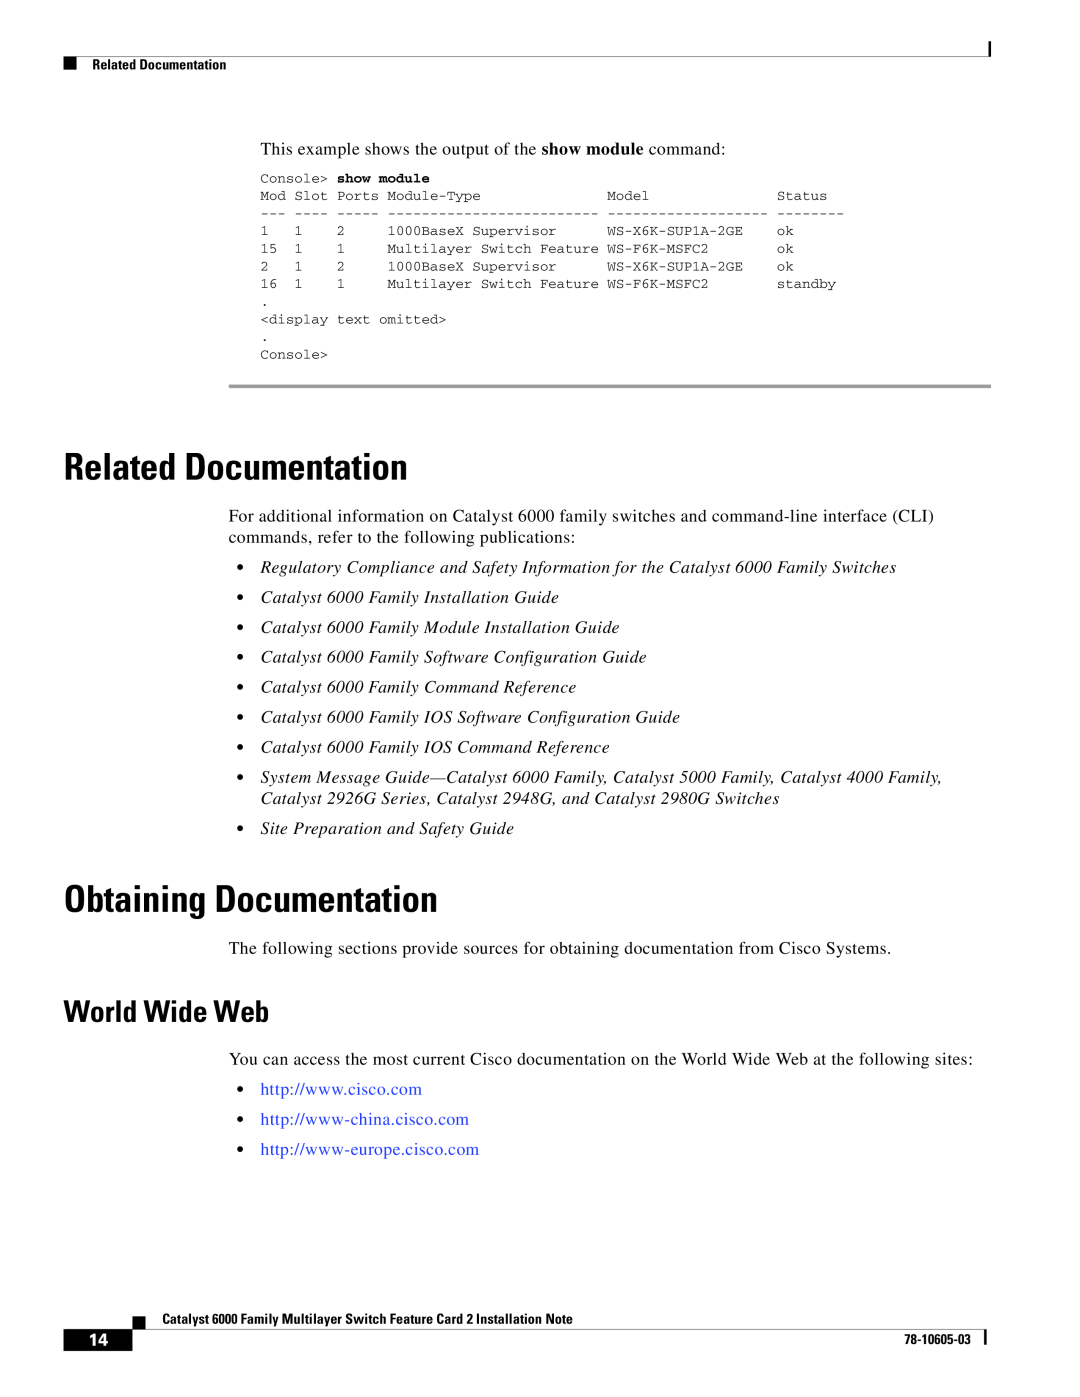 Cisco Systems WS-F6K-MSFC2 manual Related Documentation, Obtaining Documentation, World Wide Web 